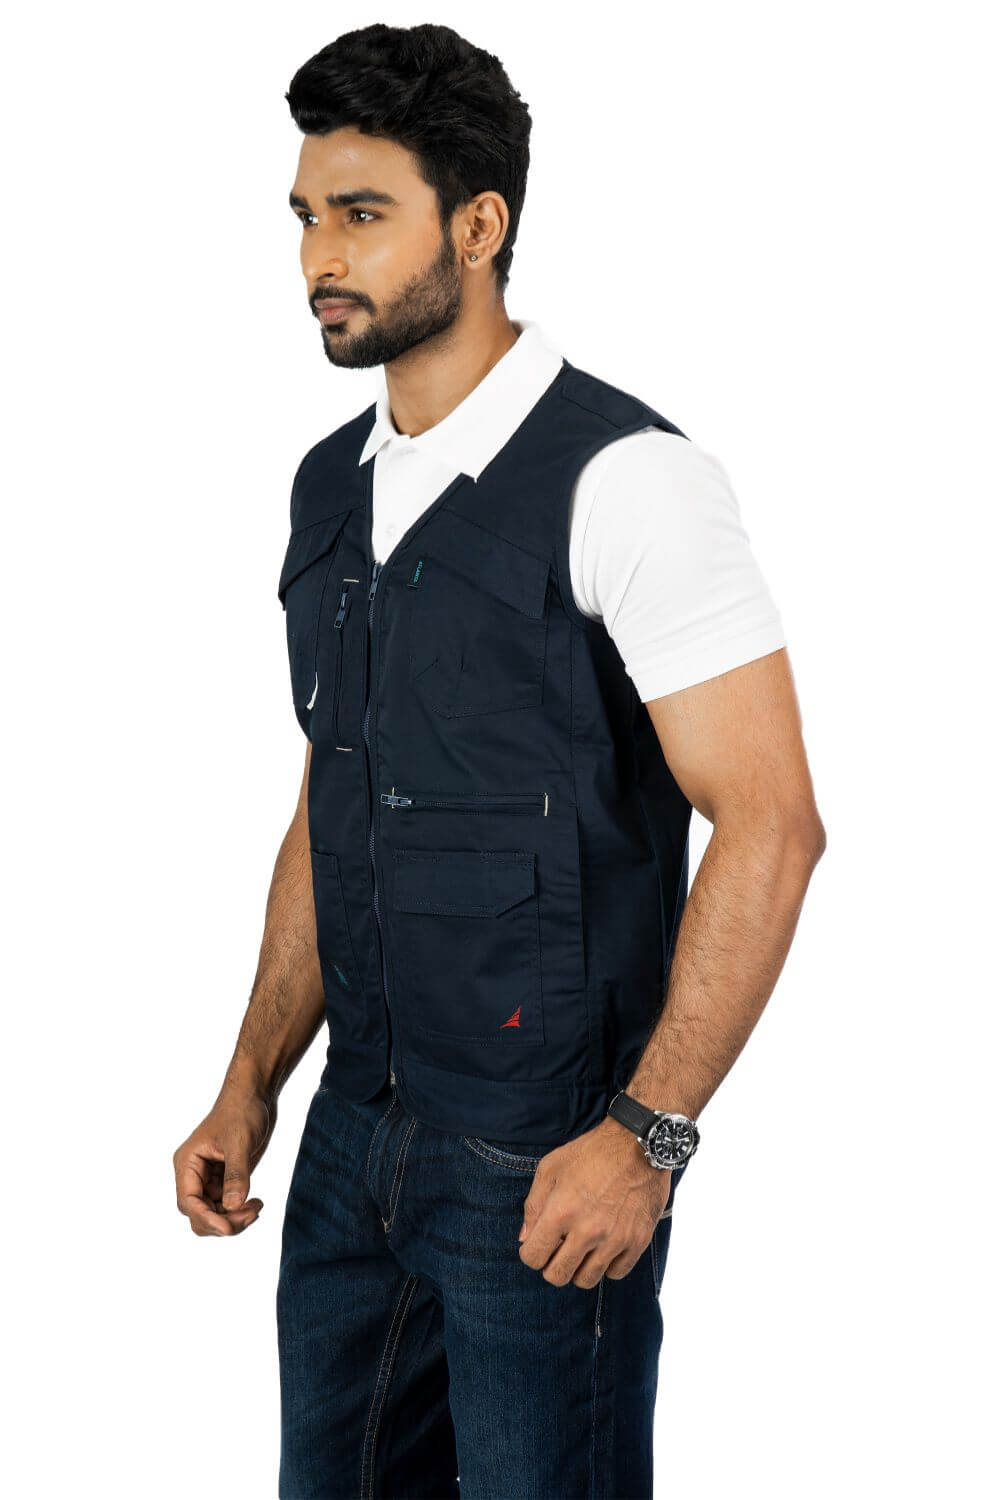 Ergonomically designed multi-utility vest